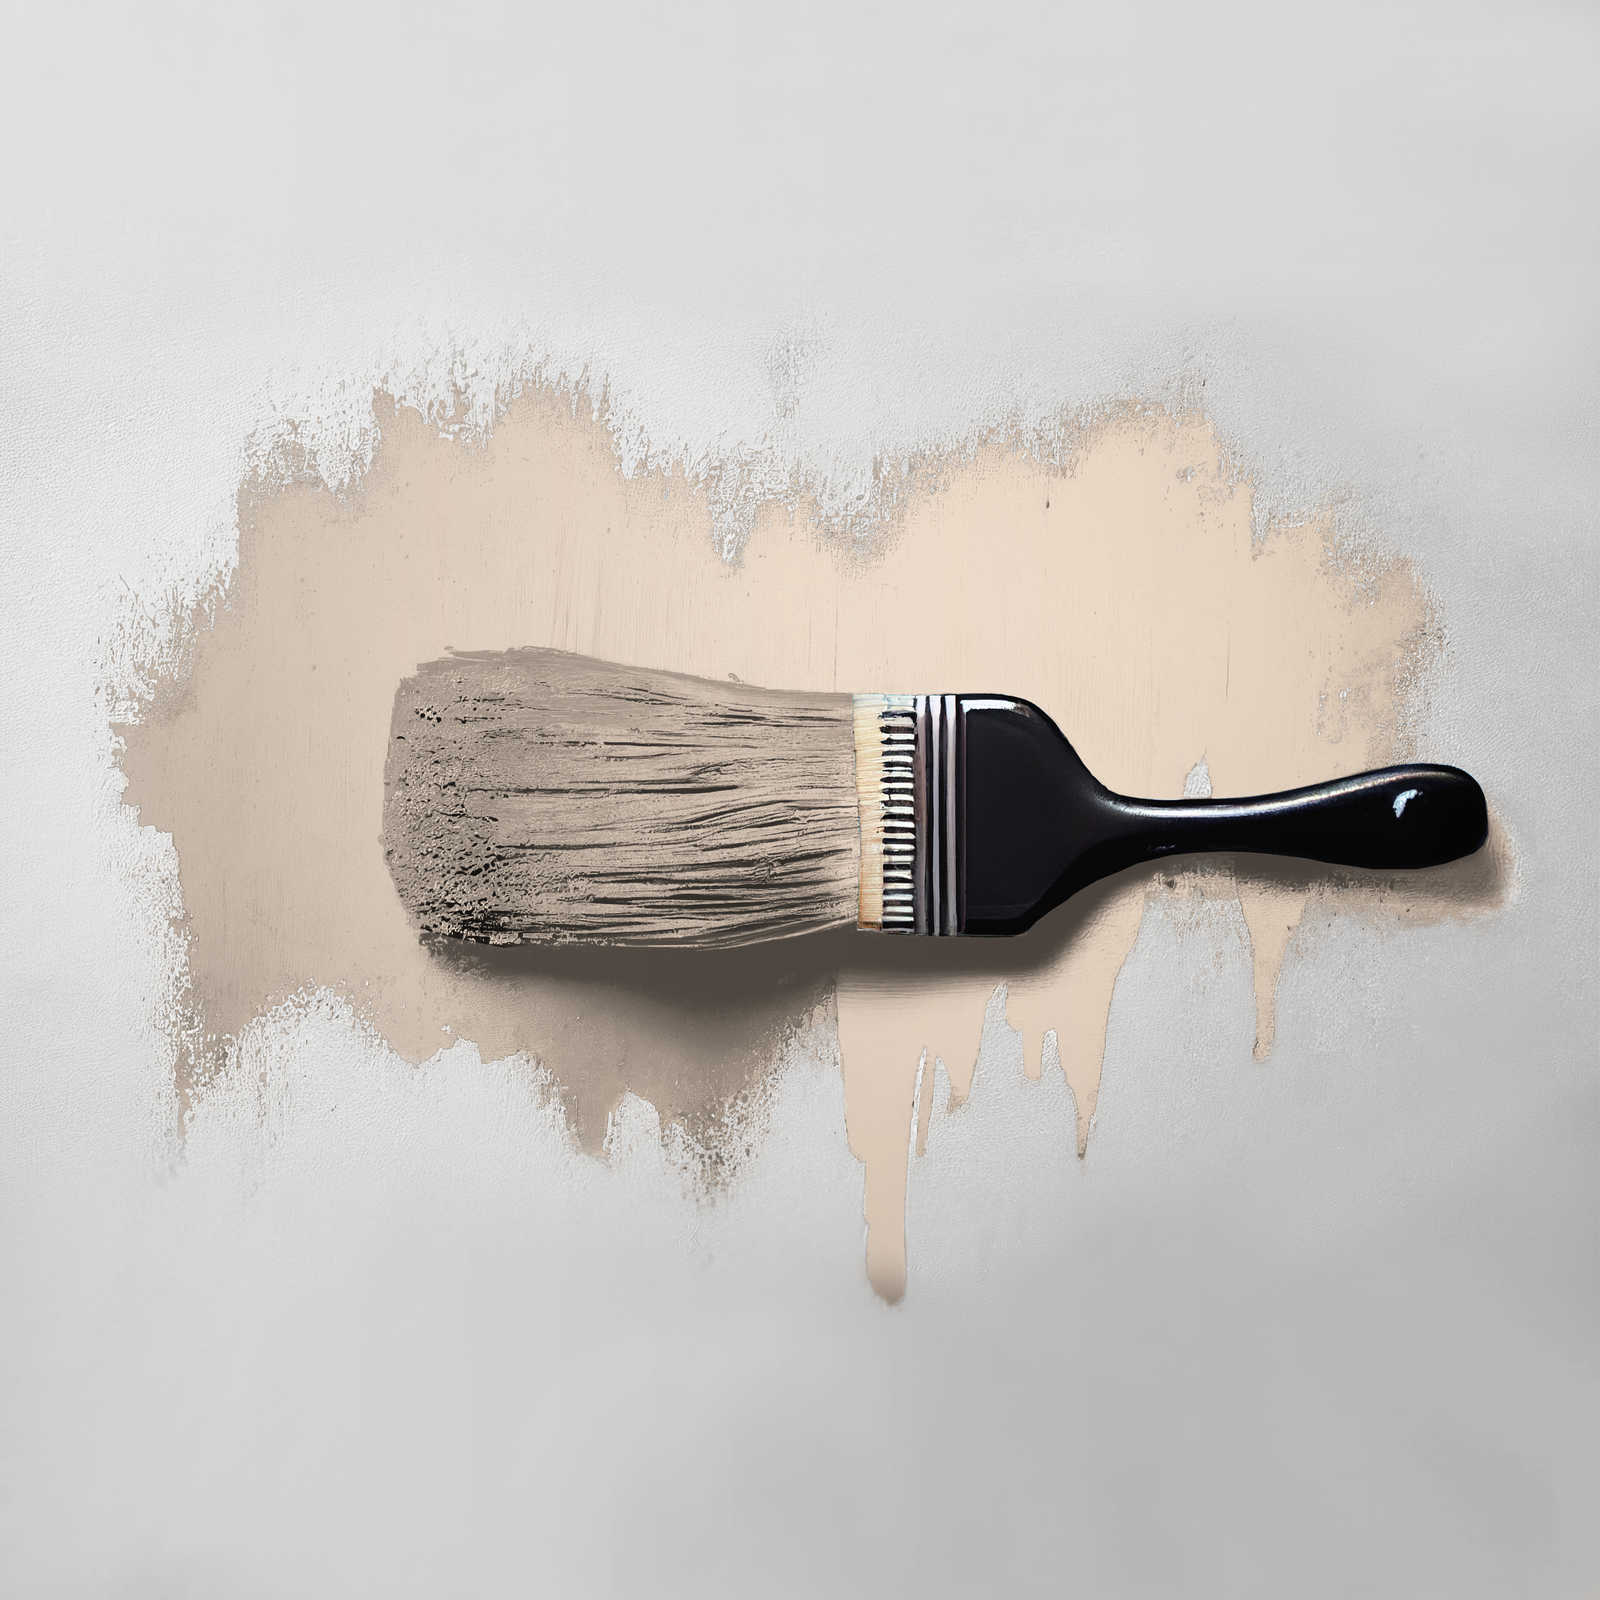             Wall Paint TCK6020 »Chalky Chickpeas« in fresh light beige – 2.5 litre
        